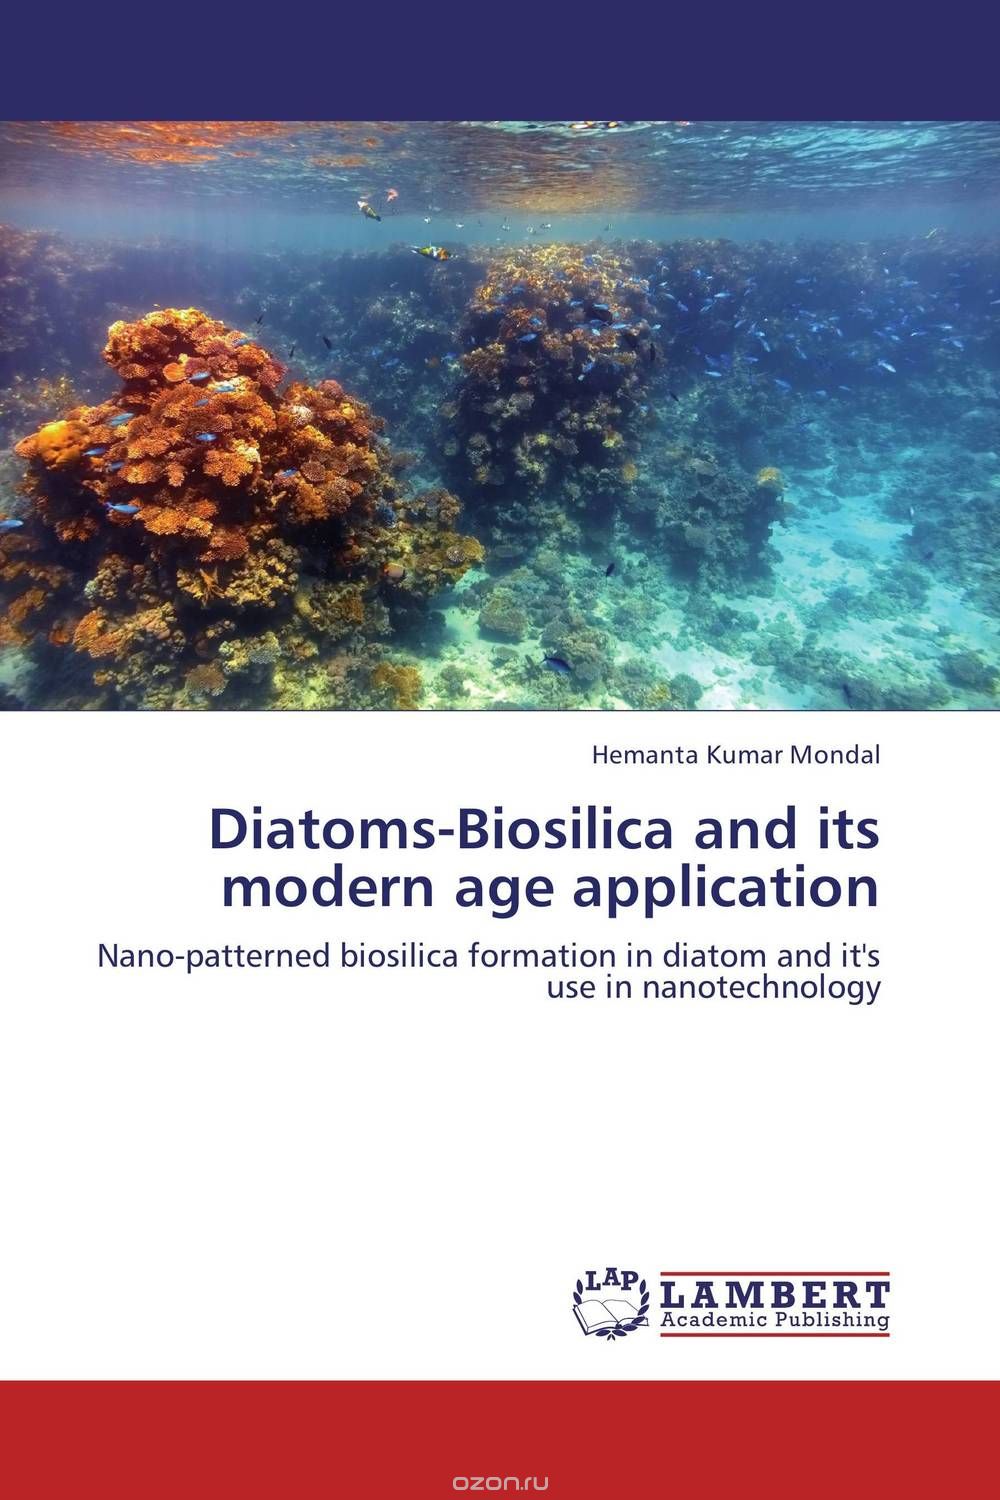 Скачать книгу "Diatoms-Biosilica and its modern age application"